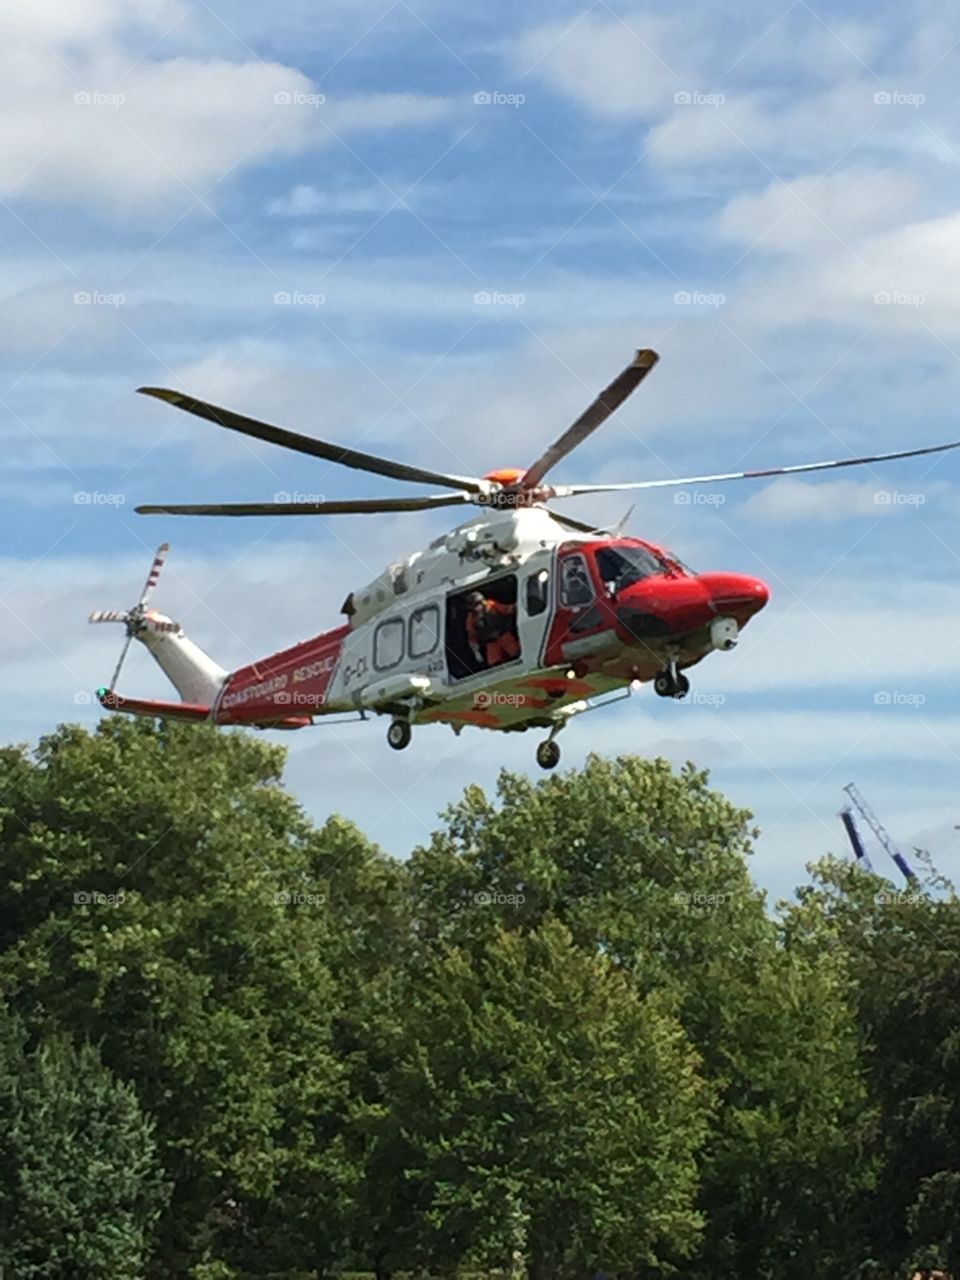 Emergency helicopter landing in London